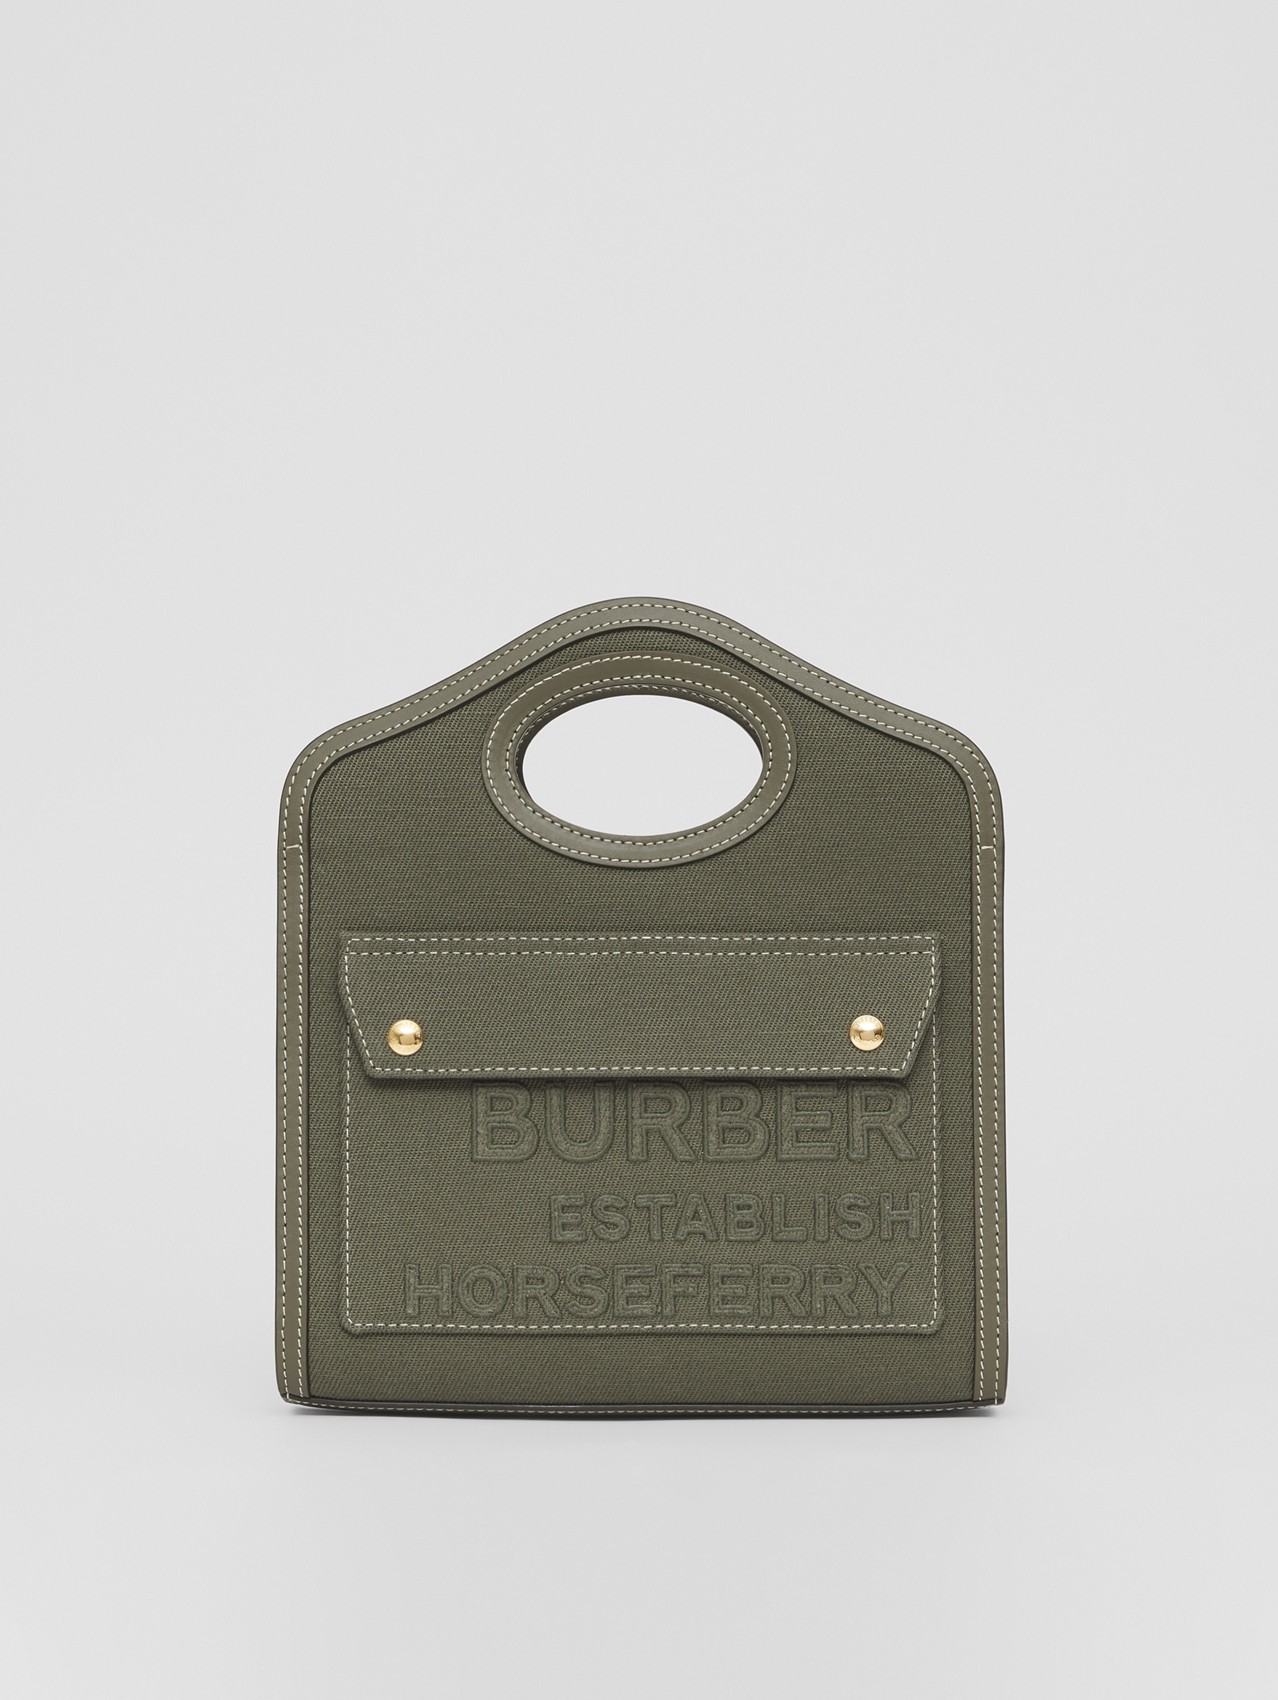 Pocket Bag im Miniformat mit Horseferry-Schriftzug (Dunkles Farngrün)